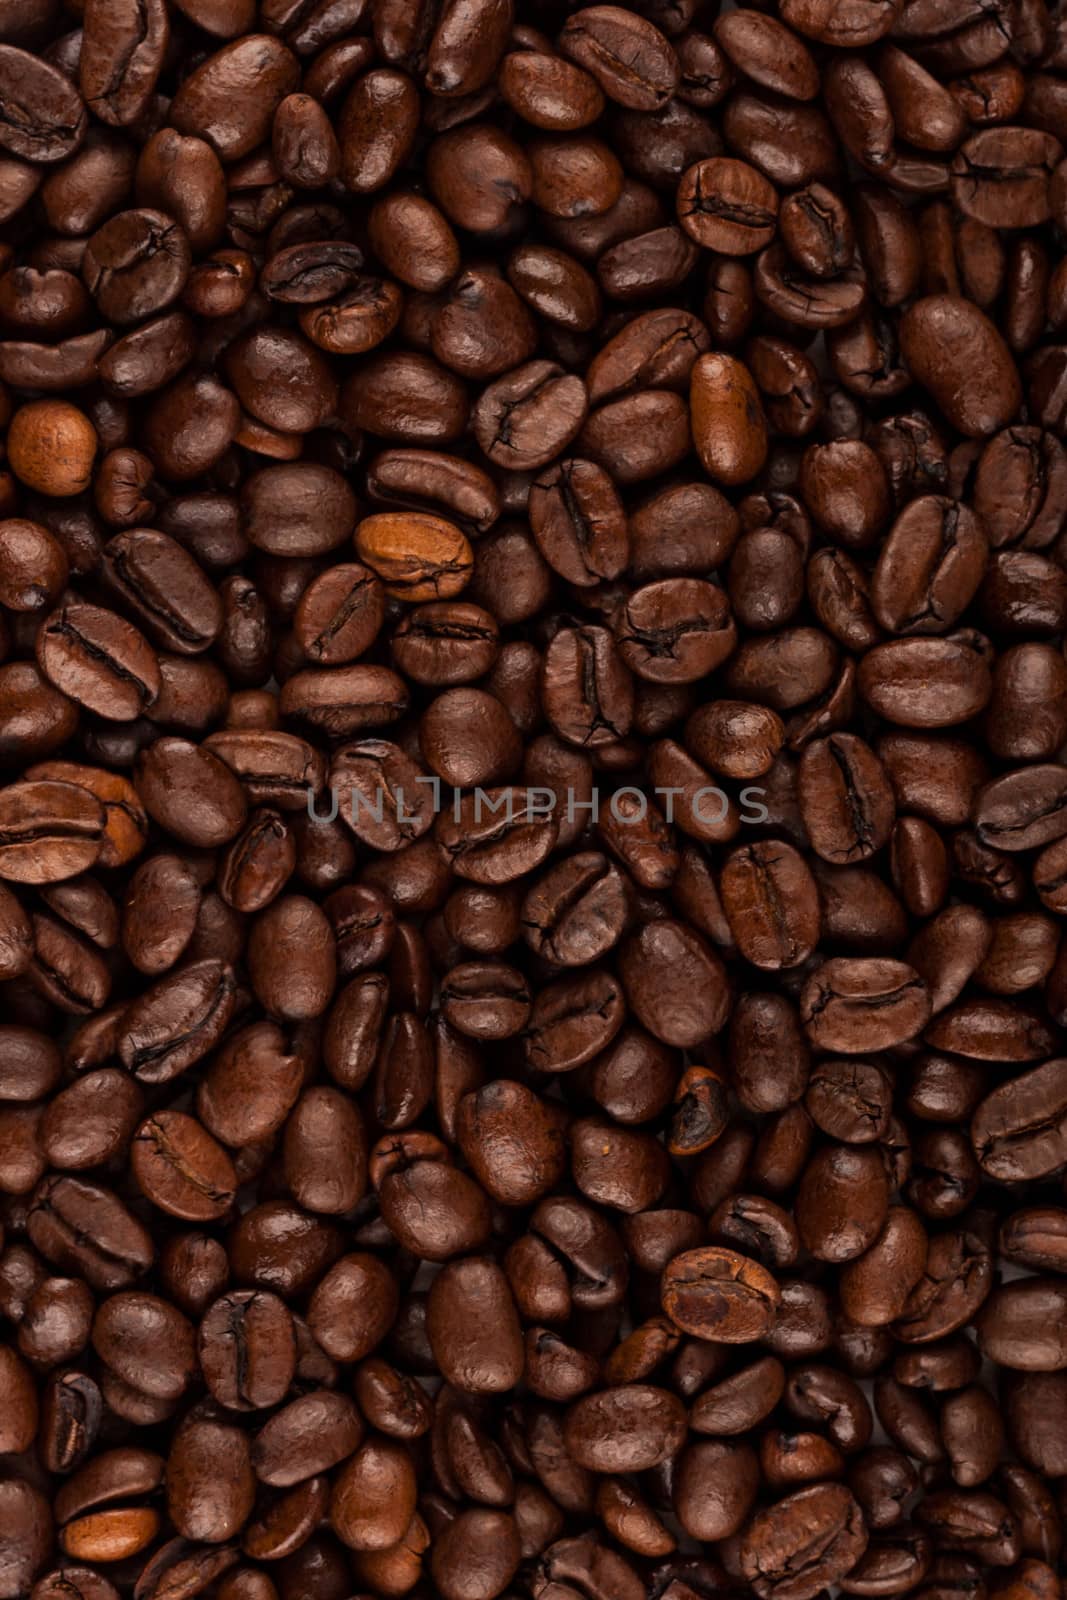 Detail of dark coffee beans.